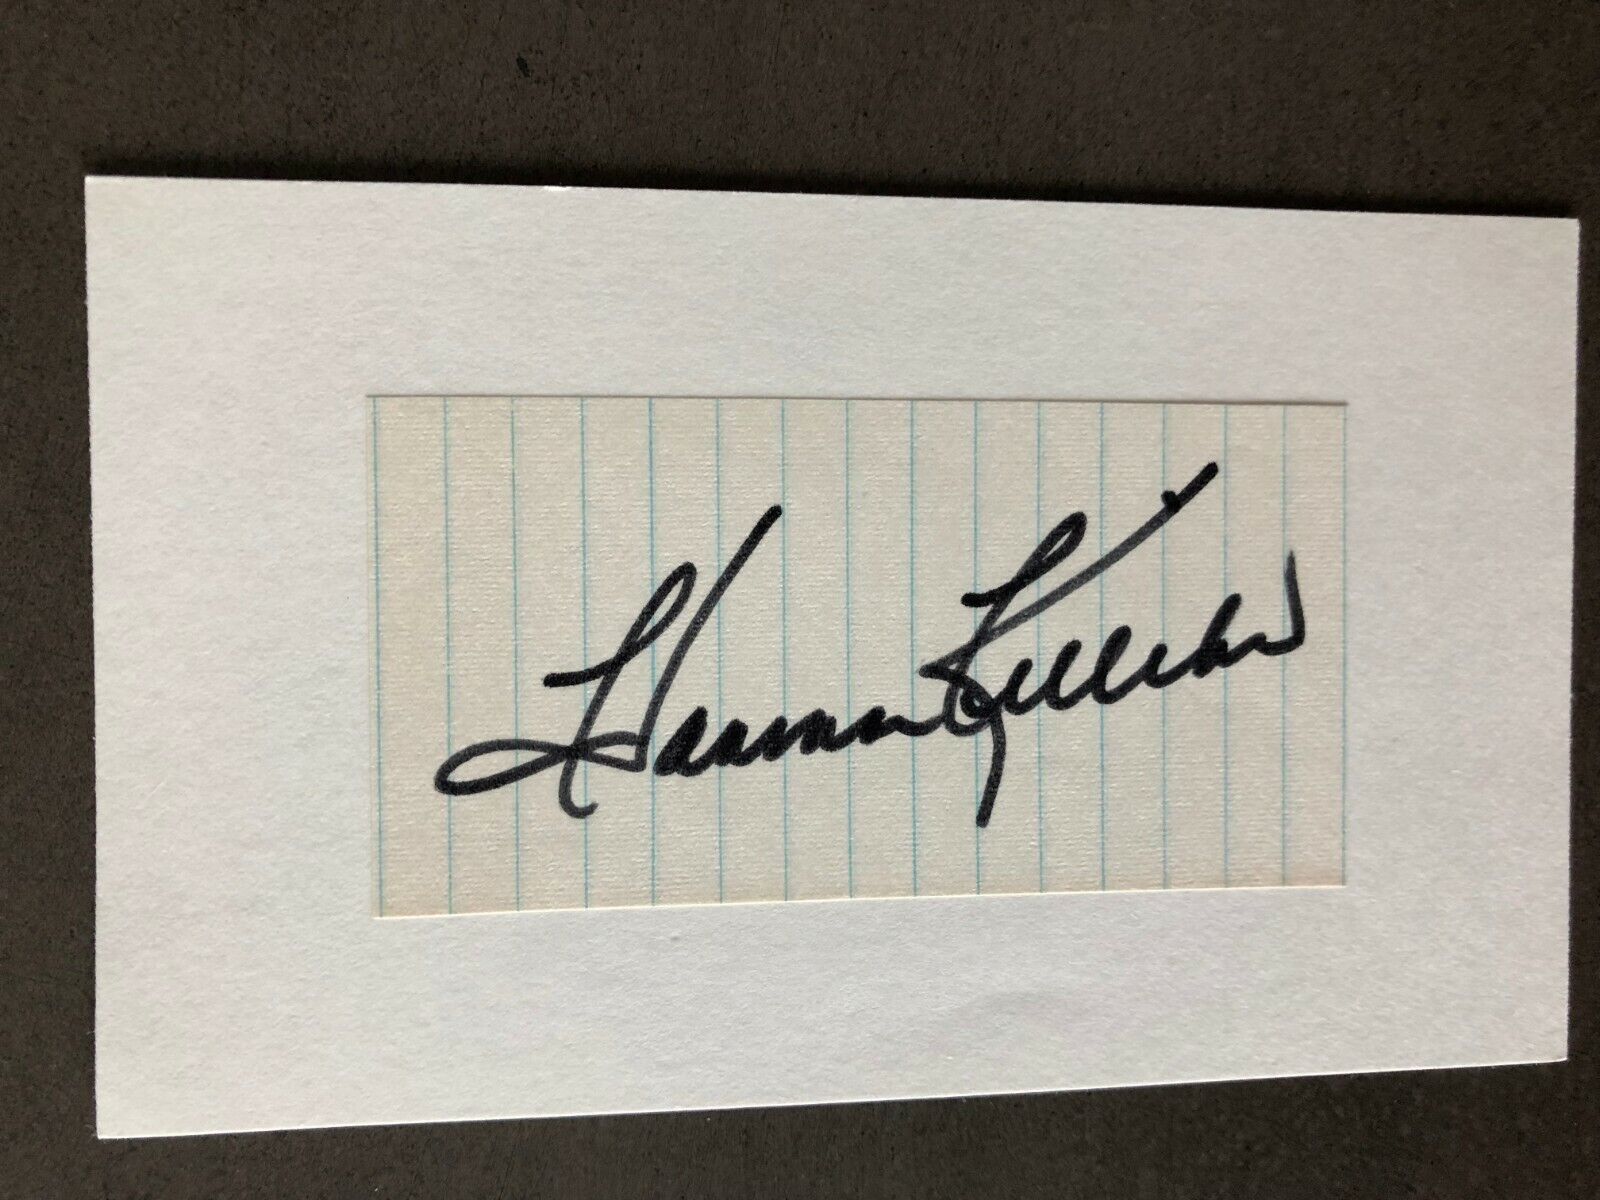 Minnesota Twins Harmon Killebrew Signature Cut On 3x5 Index Card Autographed